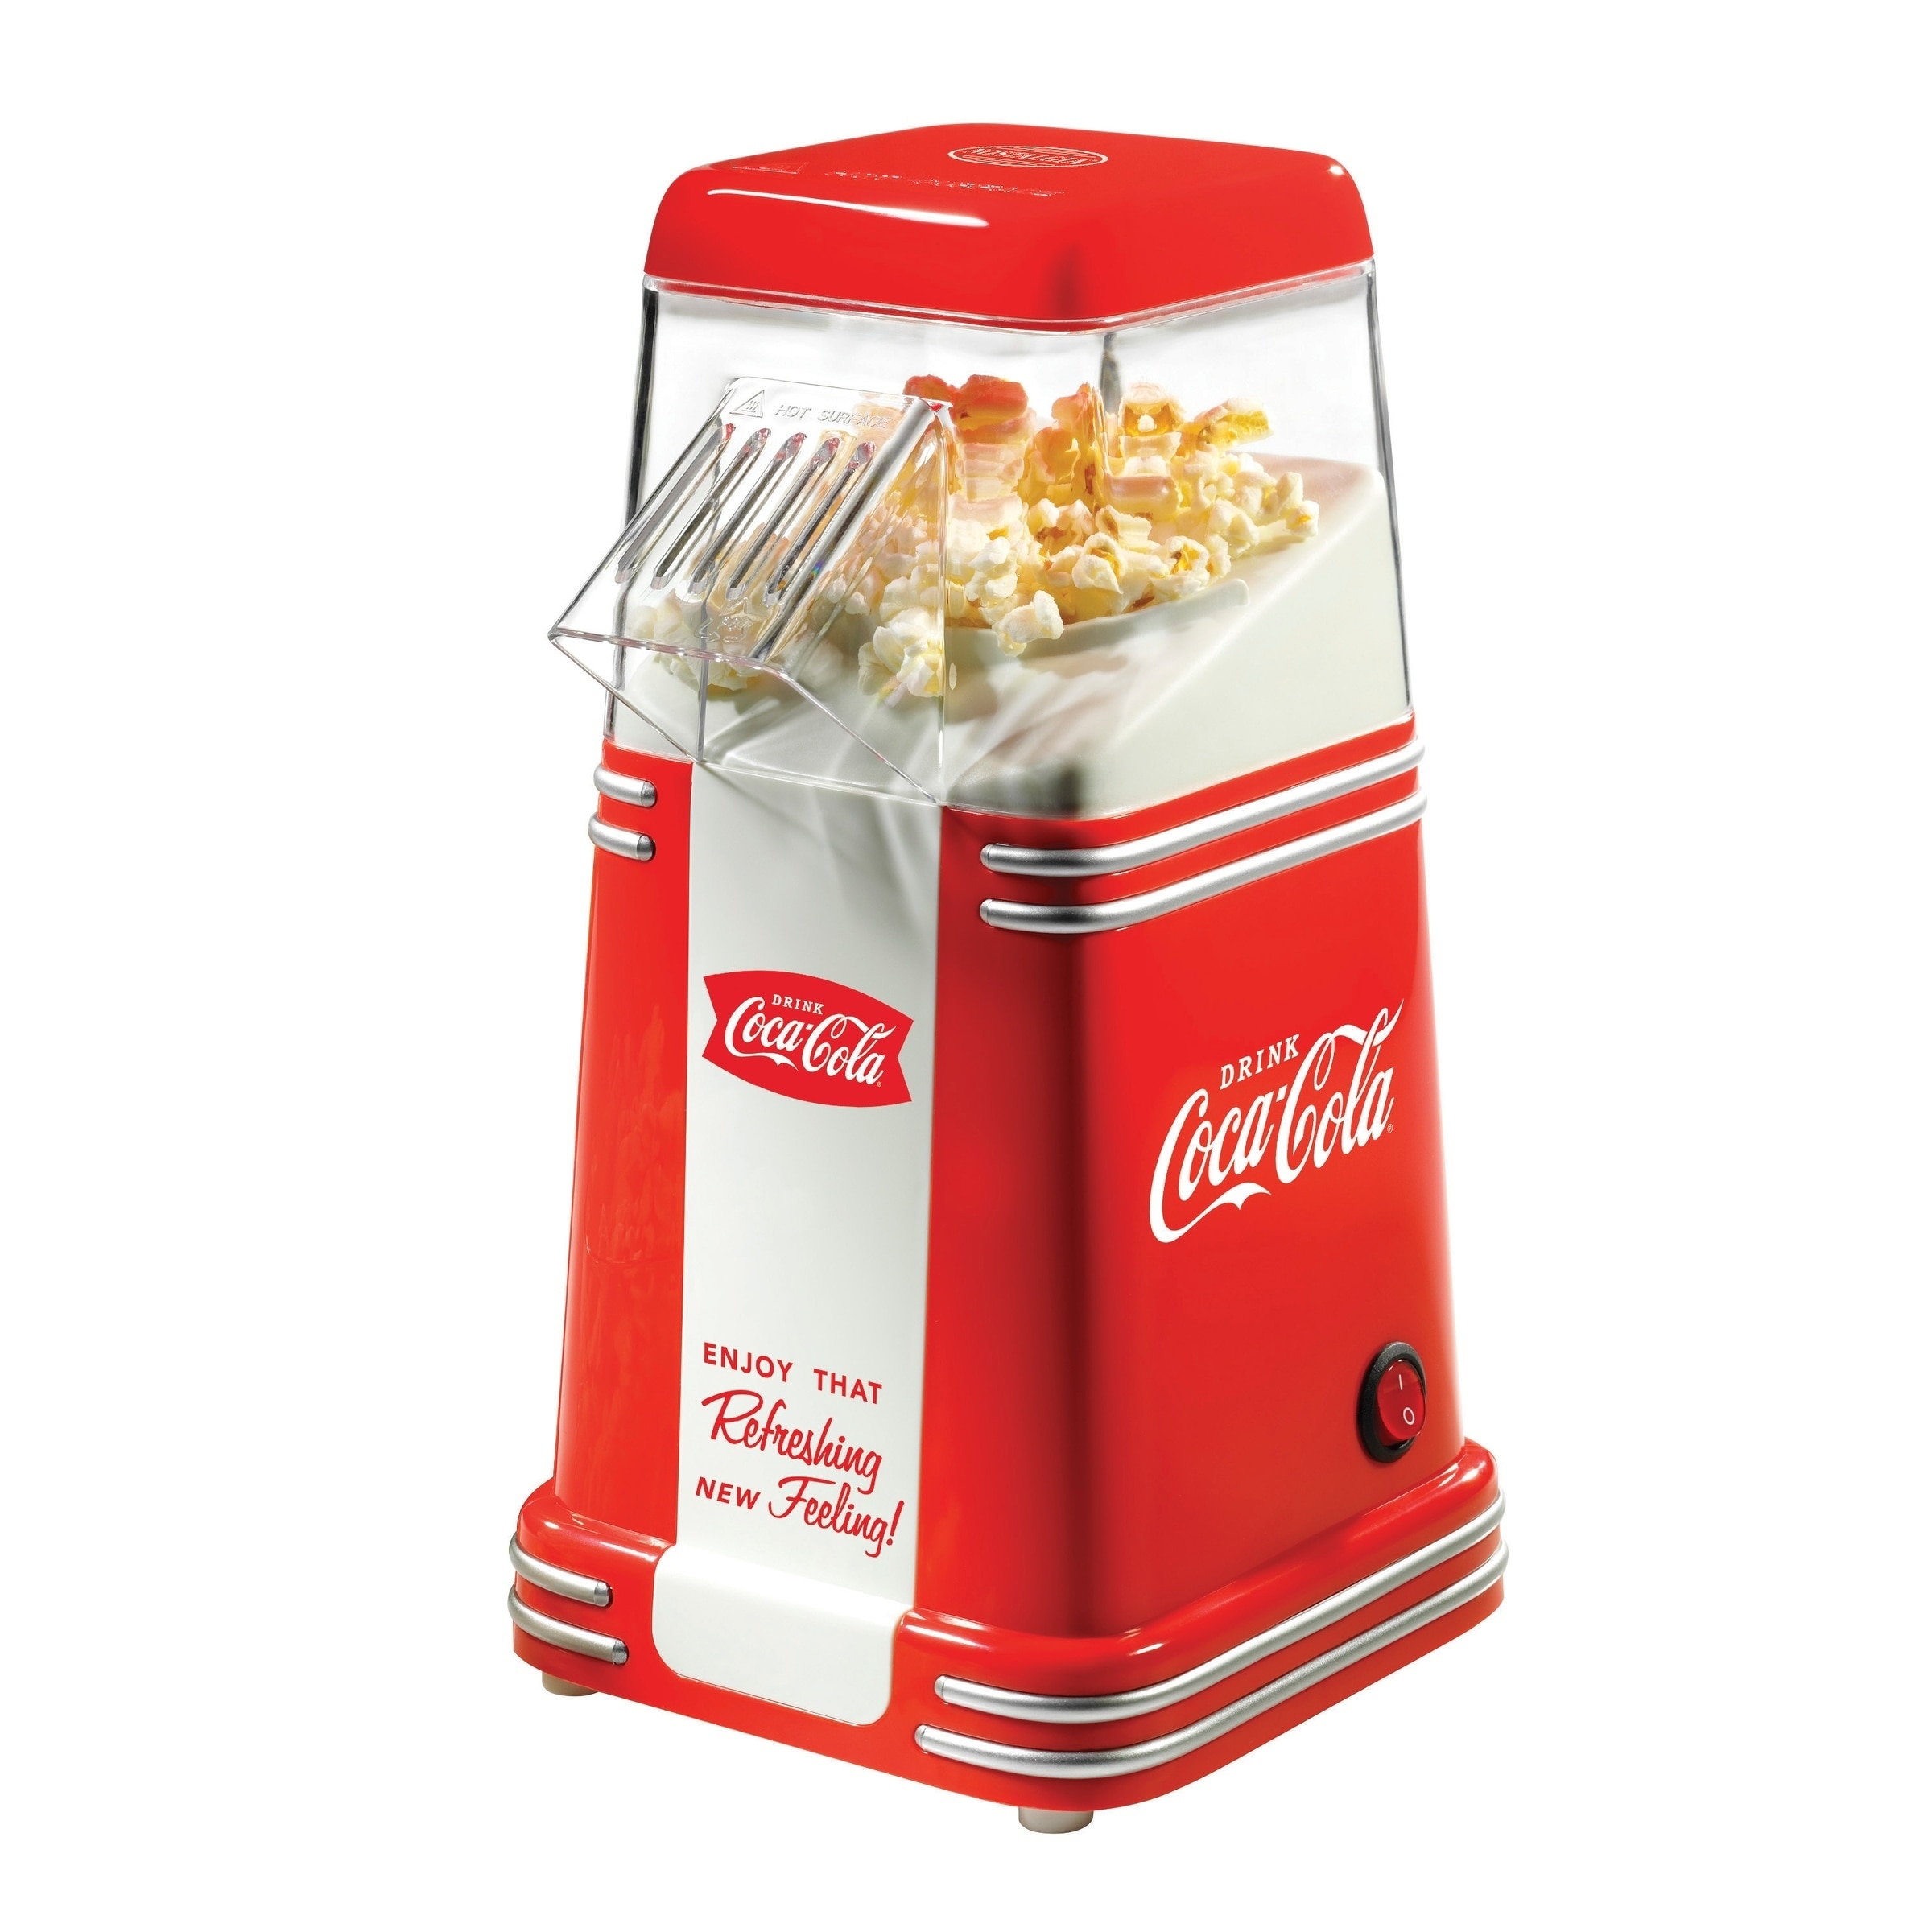 https://ak1.ostkcdn.com/images/products/7348177/Nostalgia-RHP310COKE-Coca-Cola-8-Cup-Hot-Air-Popcorn-Maker-1074d513-8252-4222-9e31-c0bf93582d9f.jpg